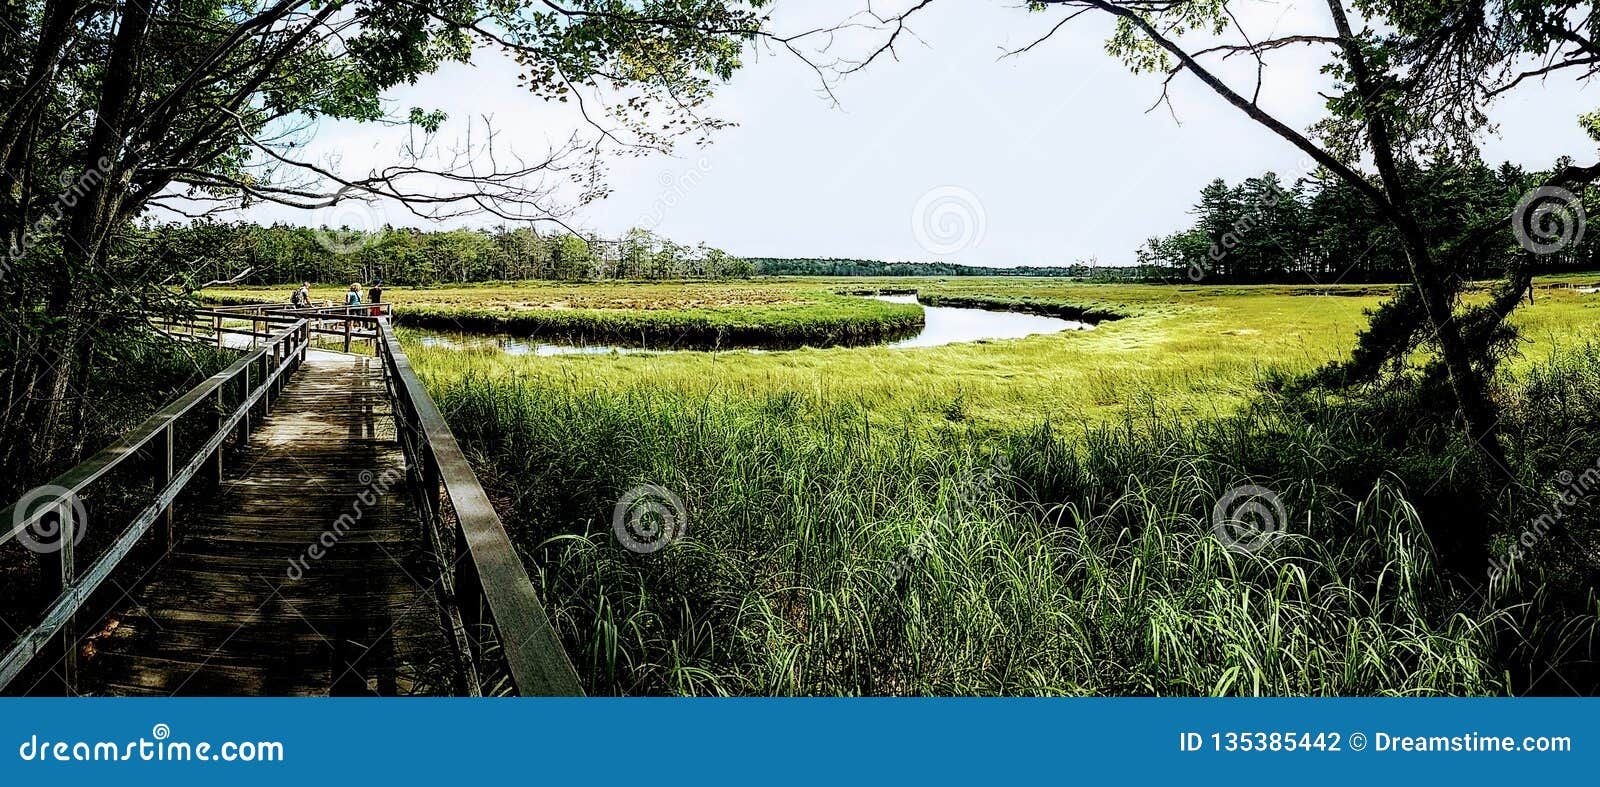 tidal wetland in maine